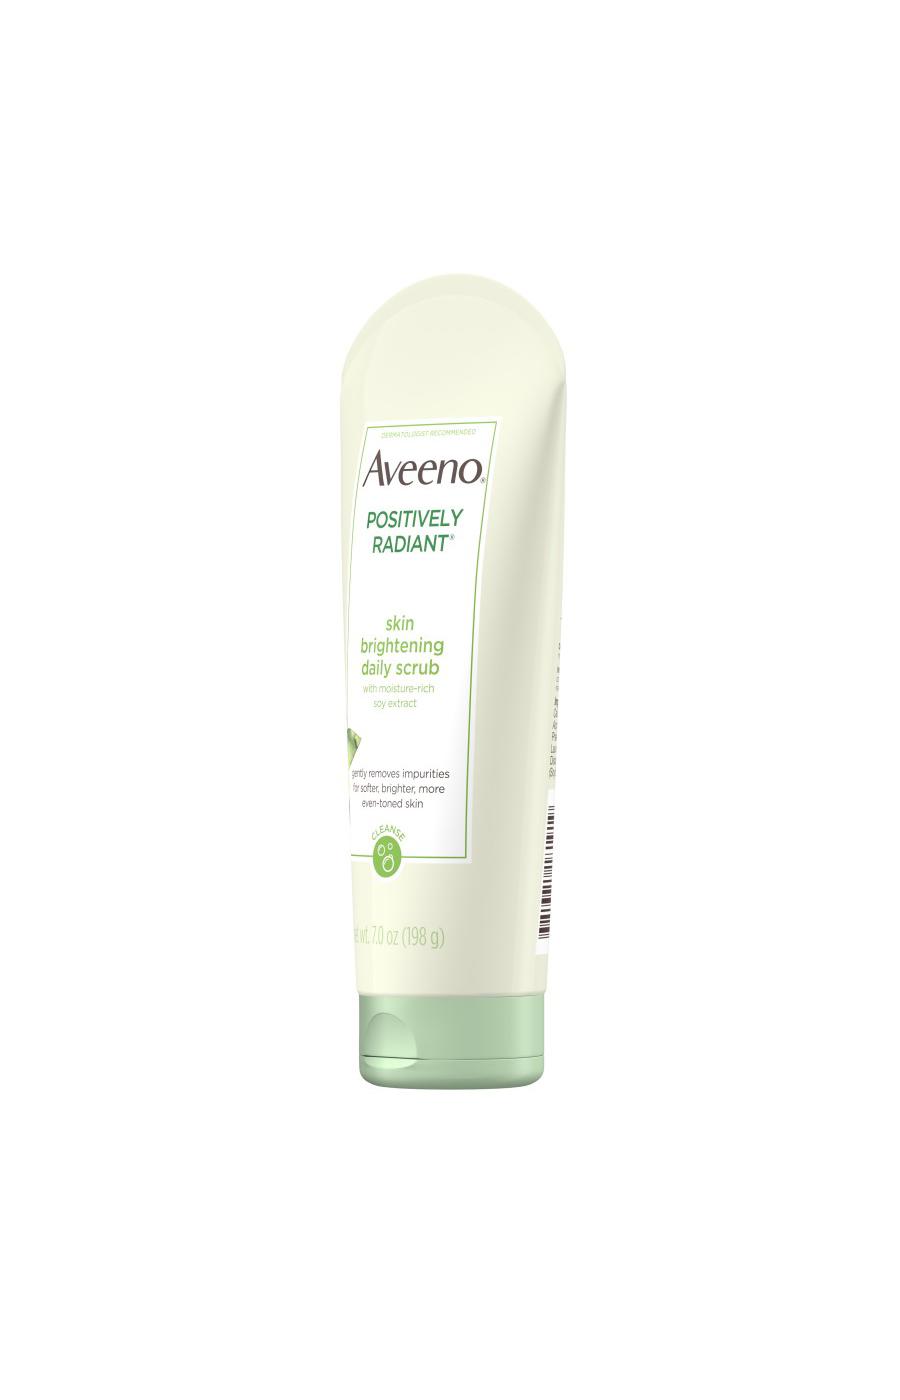 Aveeno Positively Radiant Skin Brightening Daily Scrub; image 5 of 8